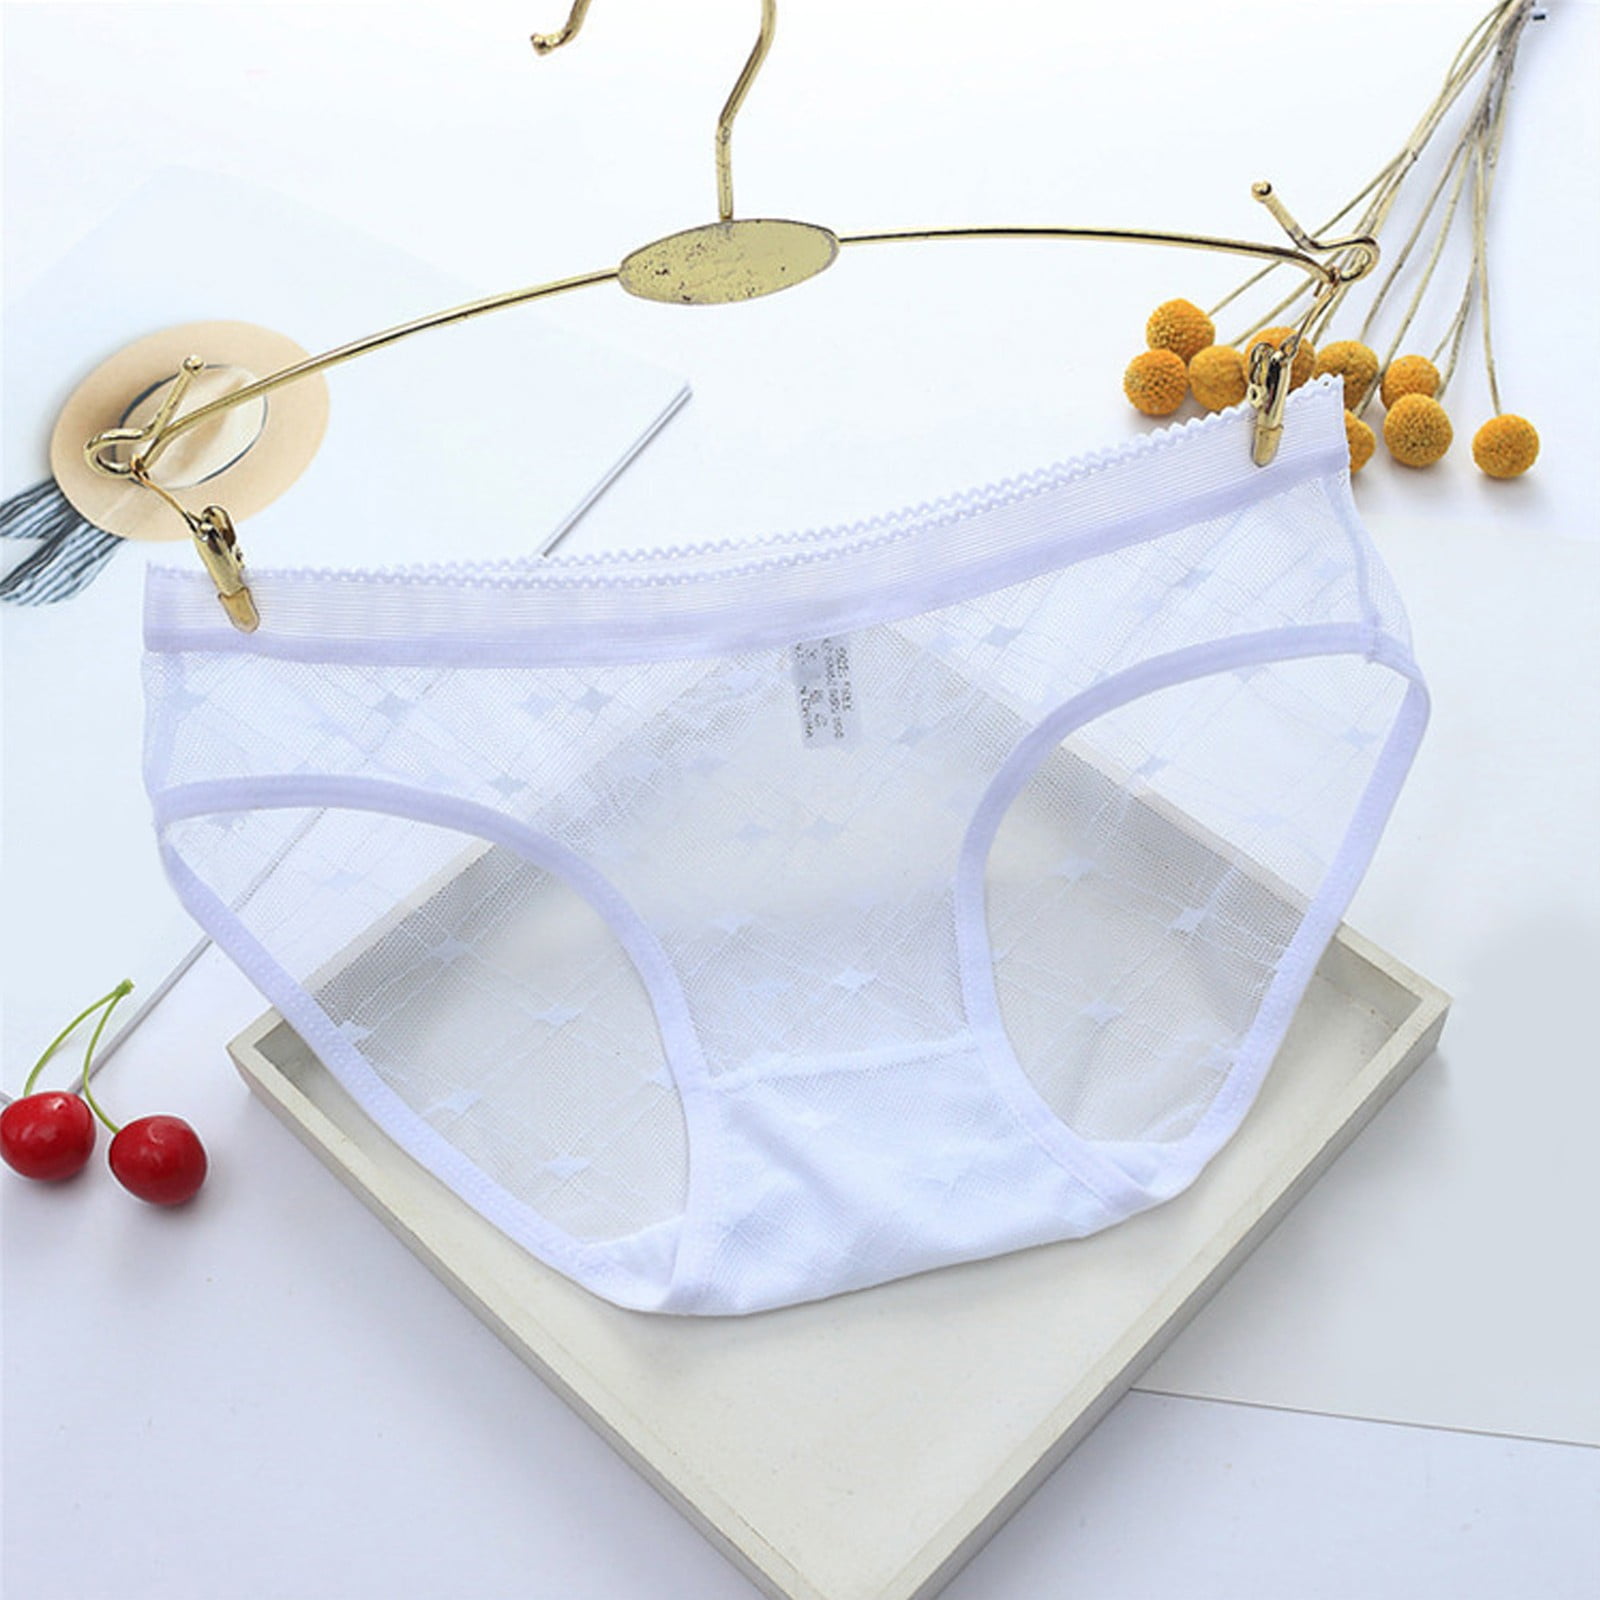 CBGELRT Women's Panties Lace Soft Lingerie Mesh Cotton Underwear  Transparent Female Panty Hollow Thin Underwear Women 